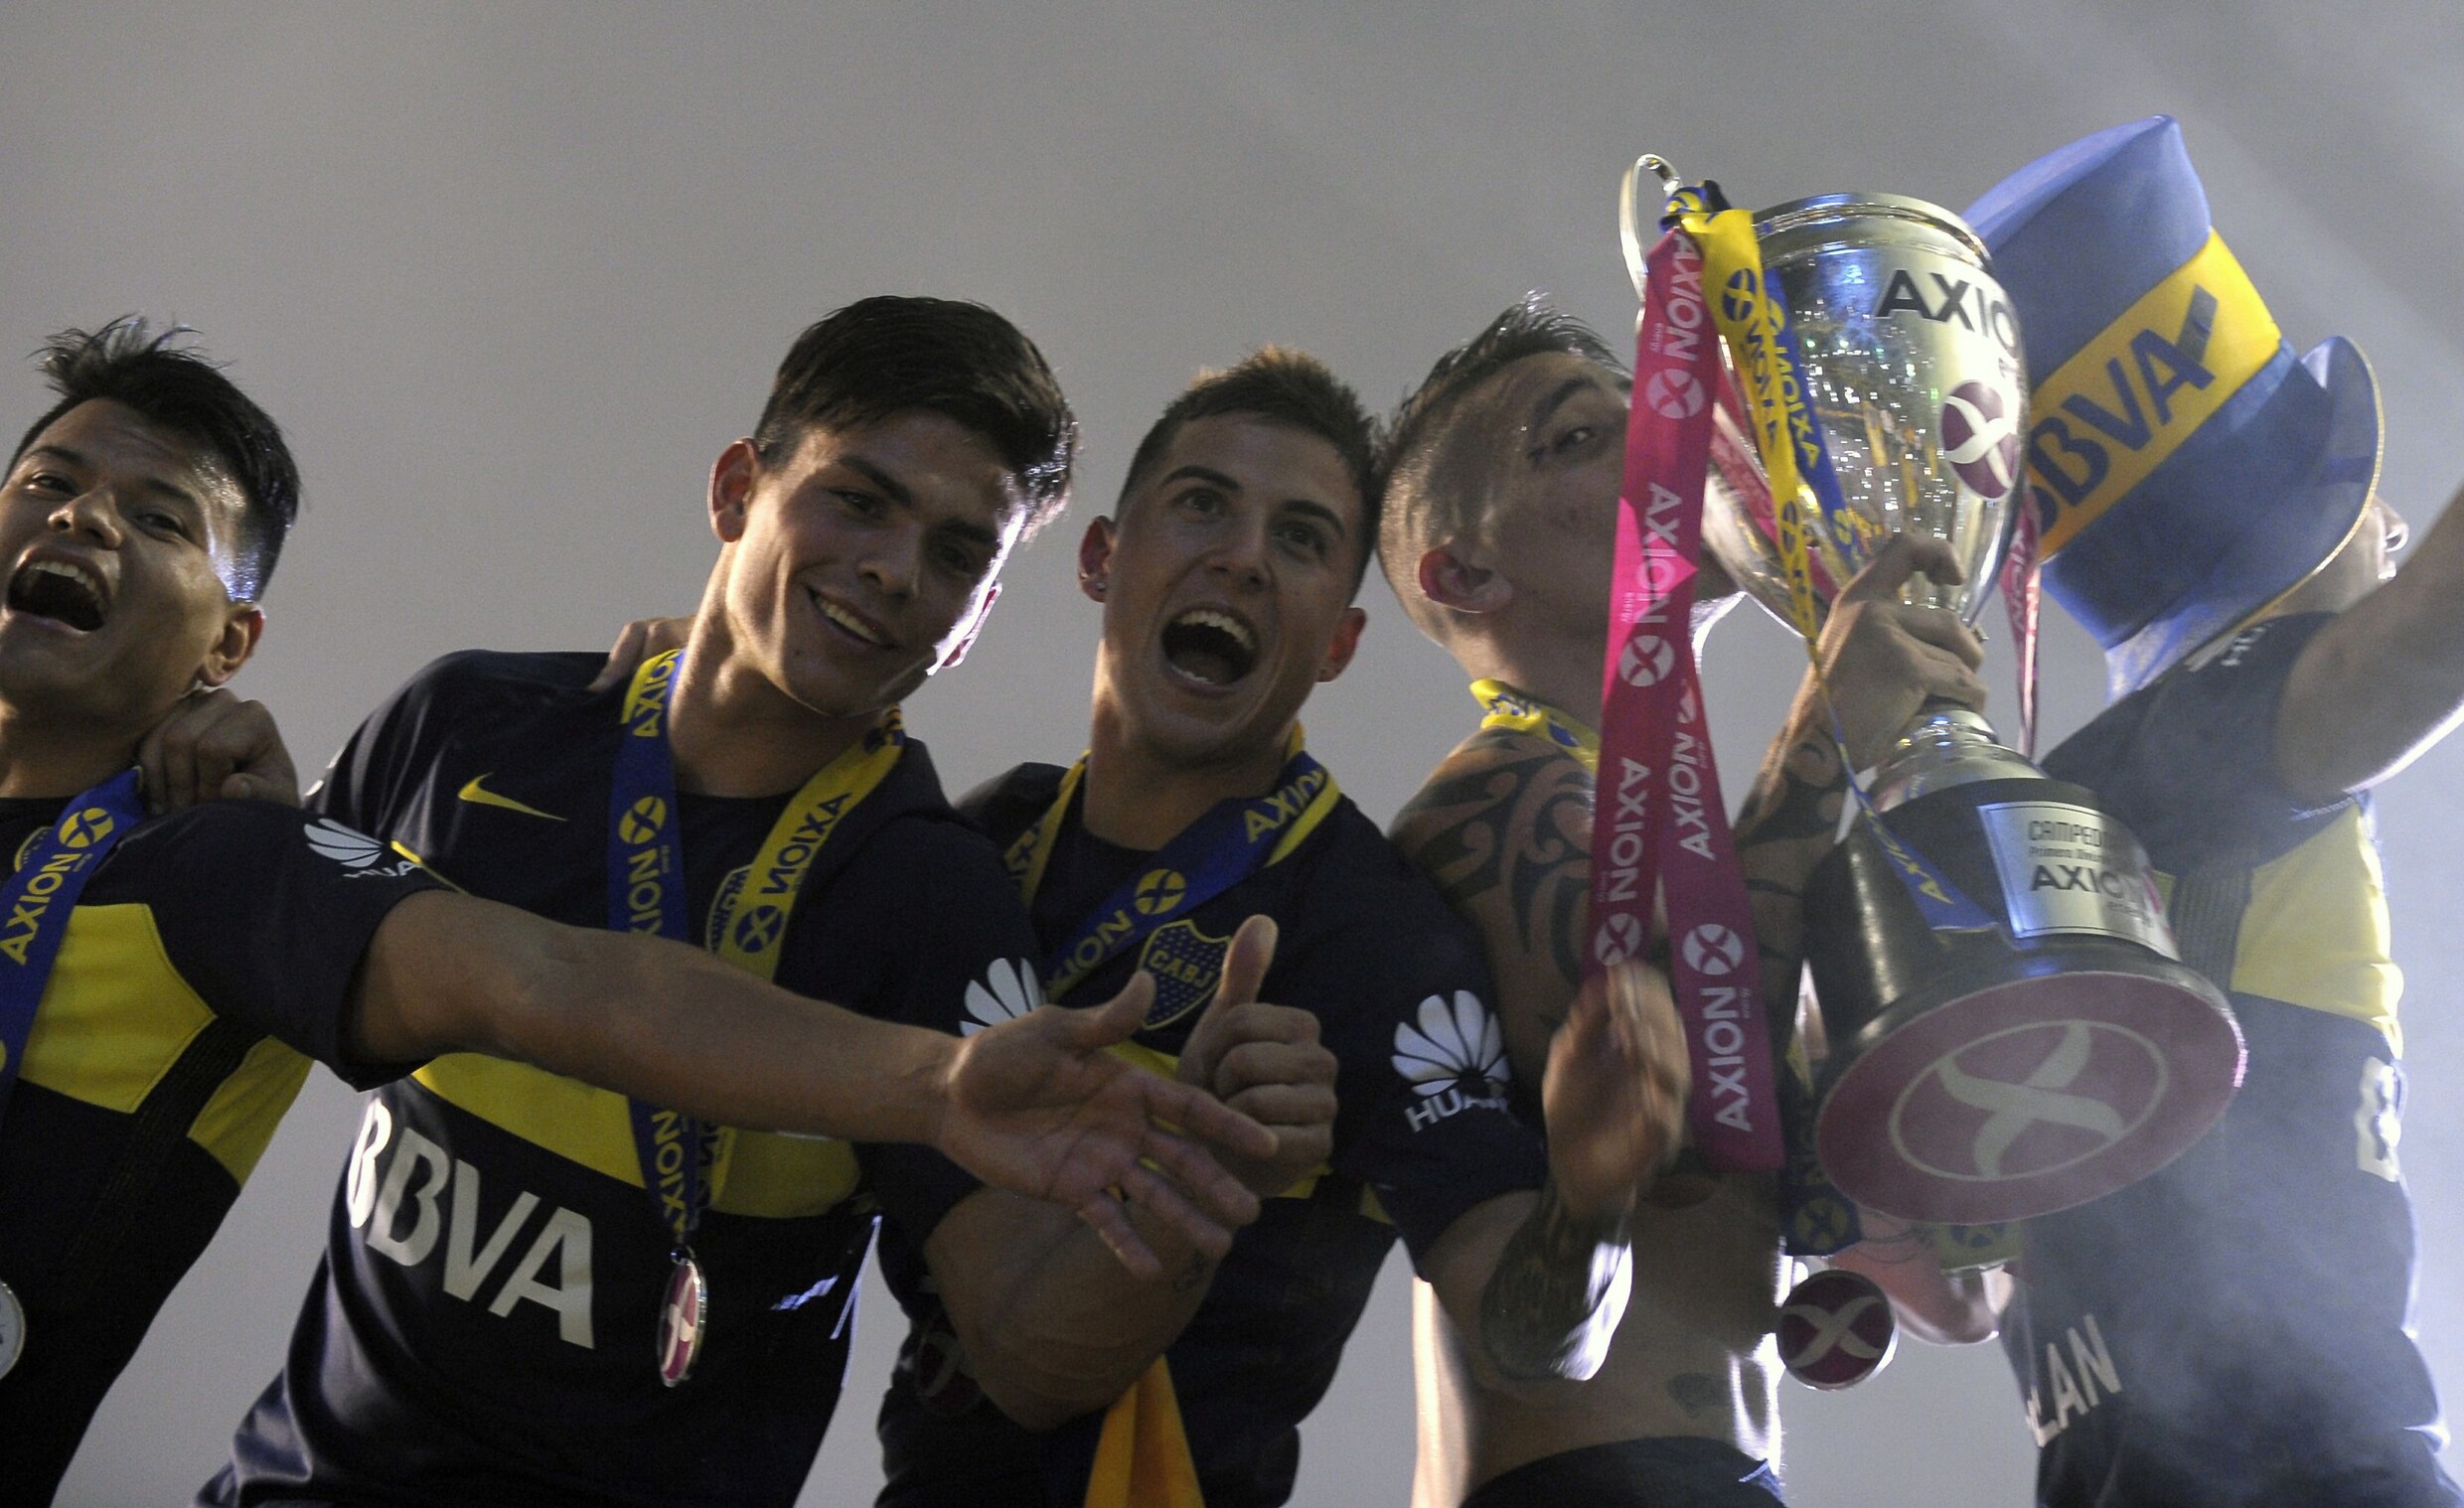 Doldwaze taferelen in 'La Bombonera', waar Boca Juniors 32ste landstitel vierden